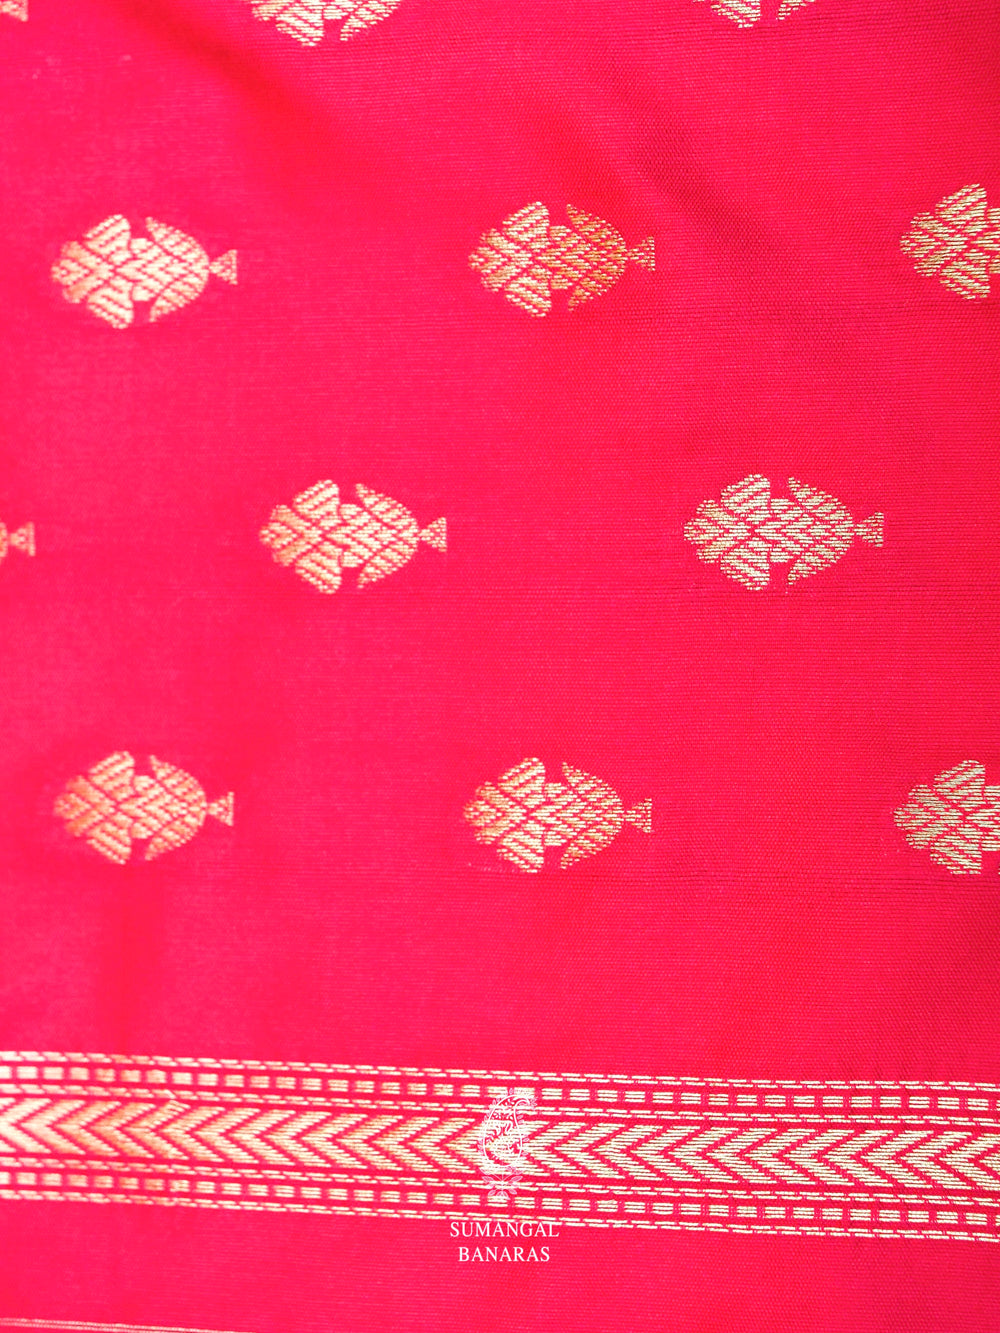 Banarasi Red Blended Rangkat Silk Saree